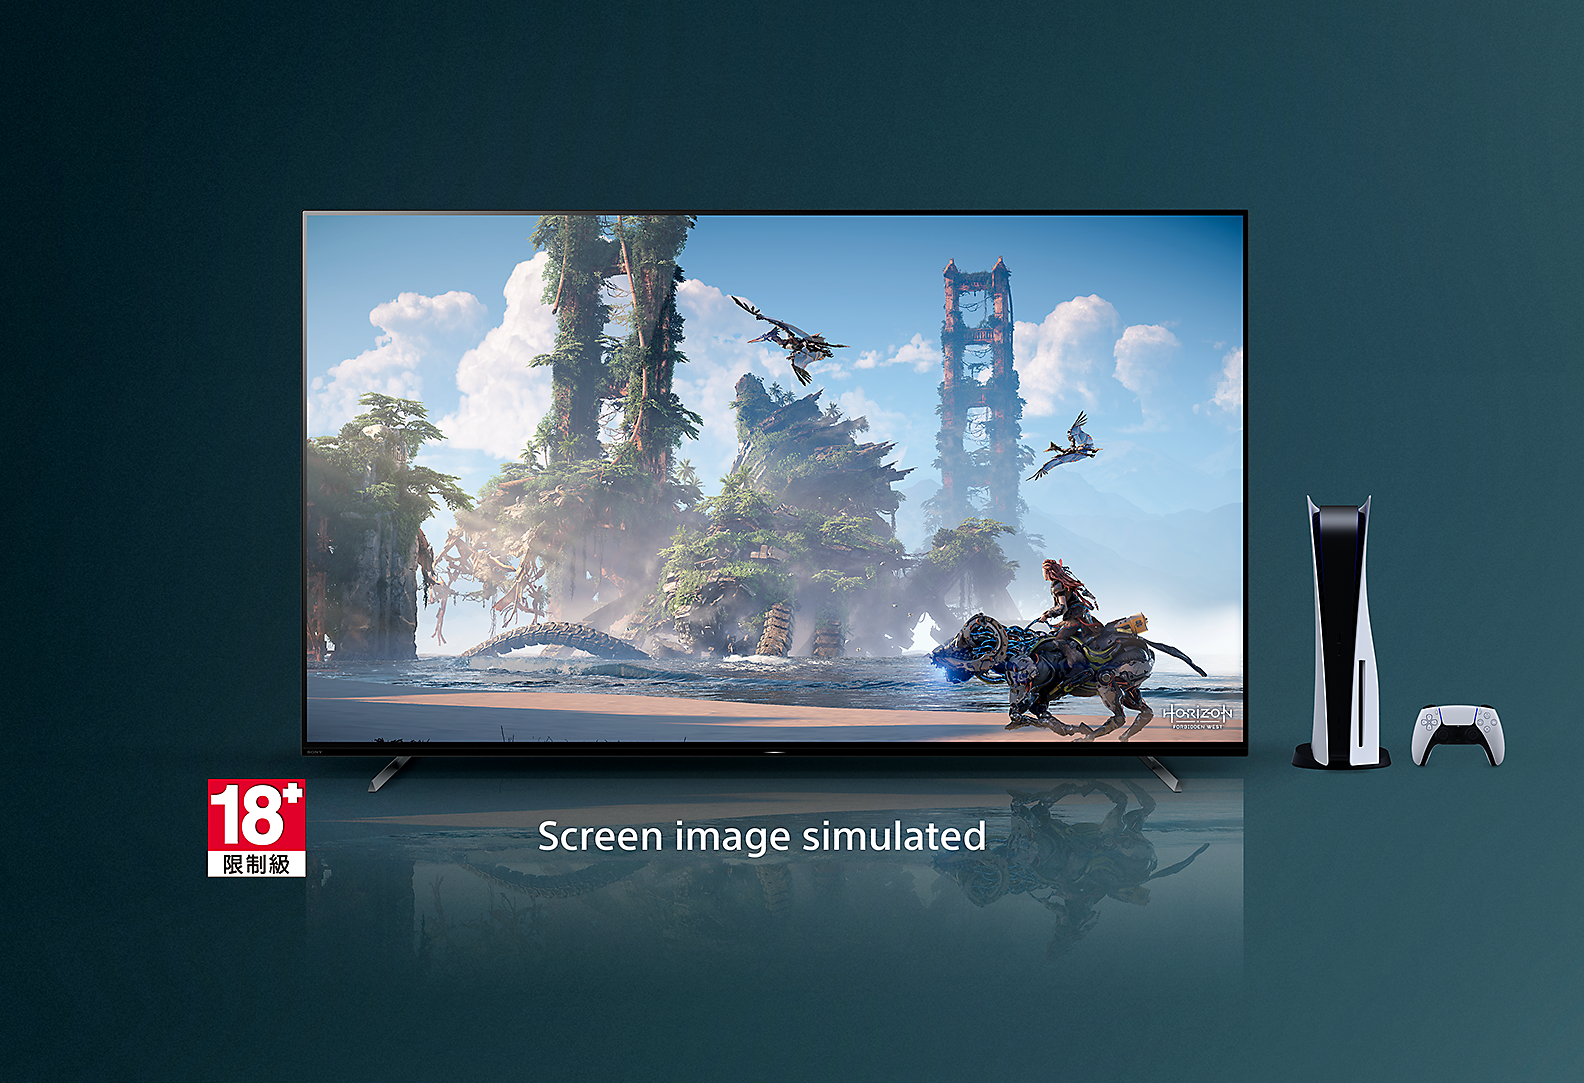 BRAVIA TV 的螢幕畫面中是 Horizon Forbidden West™ 的場景，右側是 PS5 主機和控制器，左下方是 18+ 標誌